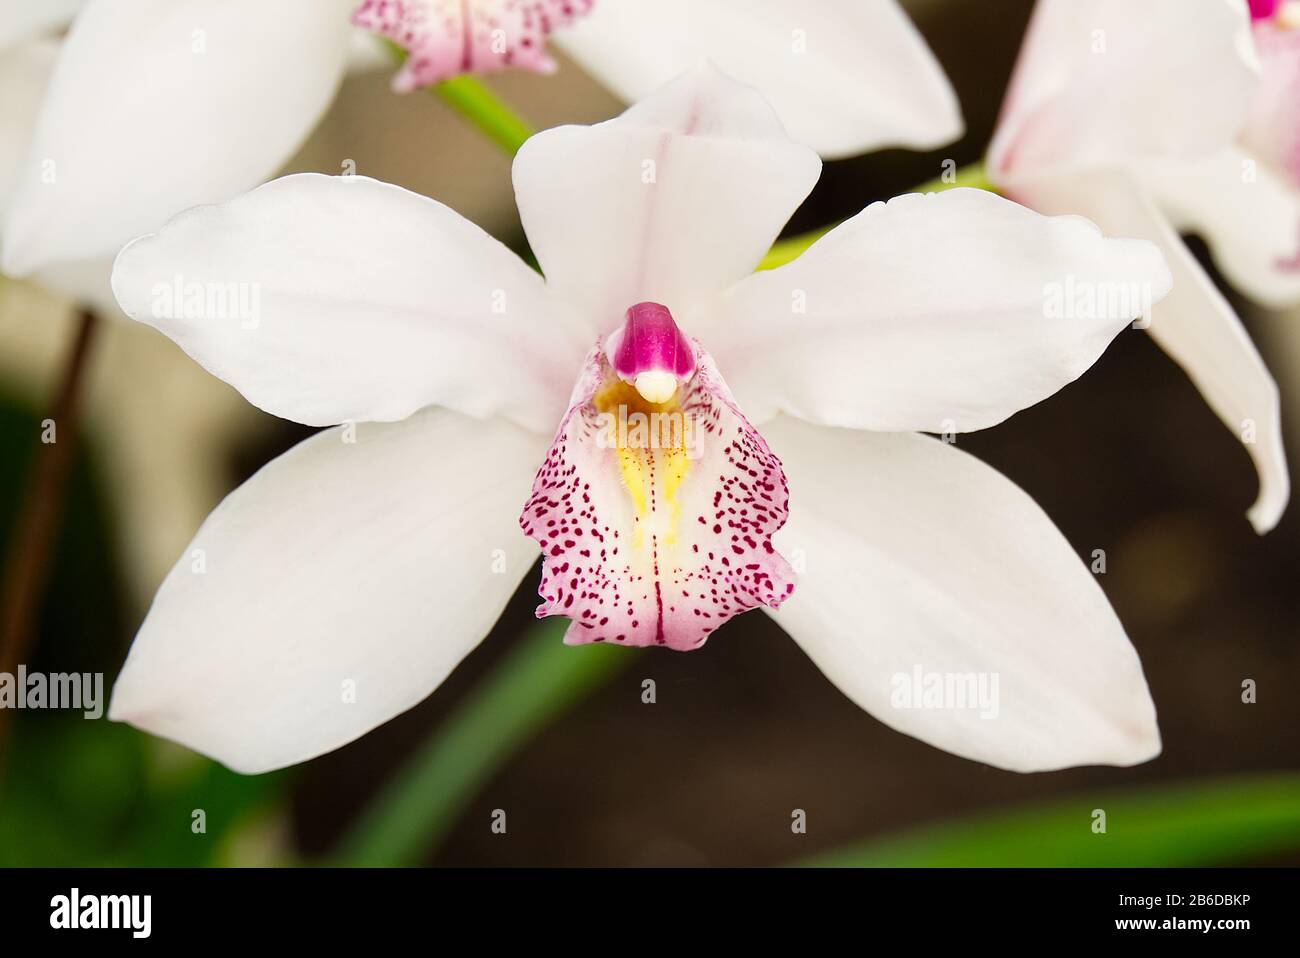 Cattleya labiata, conosciuta anche come la tortleya cremisi o la tortleya strappata dal rubino, è la specie tipo di Cattleya. Orchidee Cattleya Foto Stock